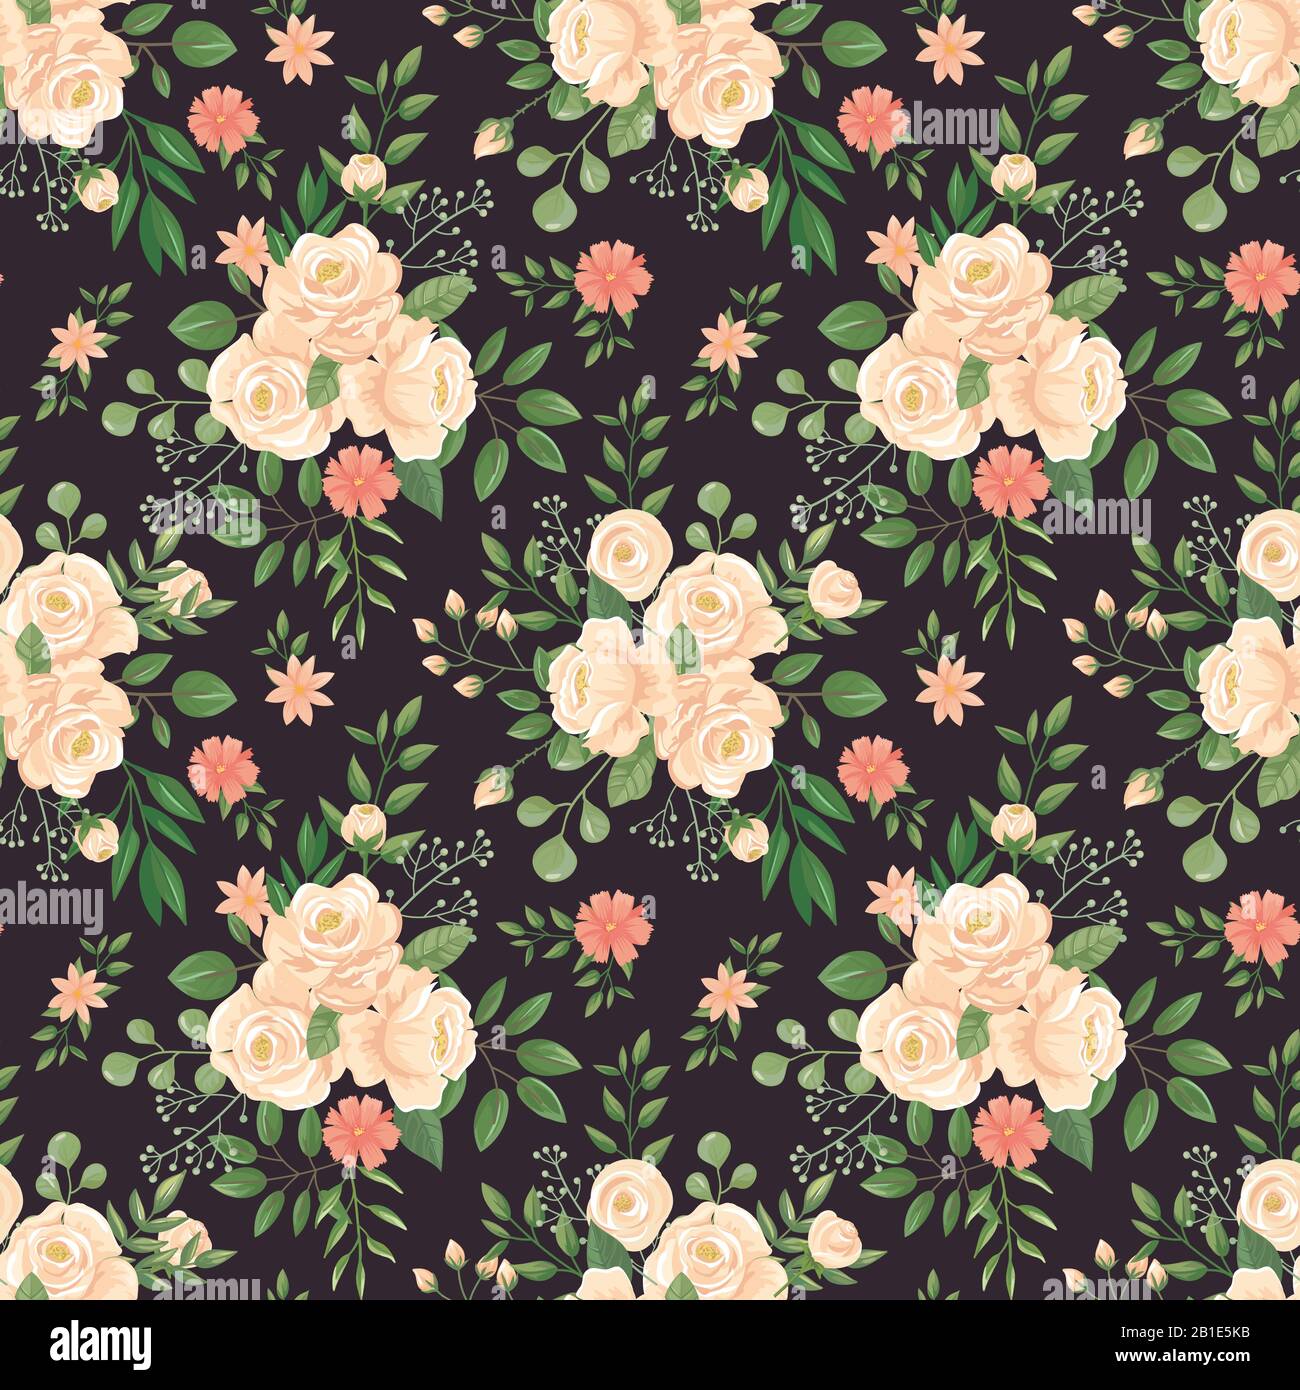 Muster aus Rosenblüten. Roses schwarzer Druck, Blumenknospen und Blumenmuster nahtlose Vektor dunkle Hintergrundillustration Stock Vektor